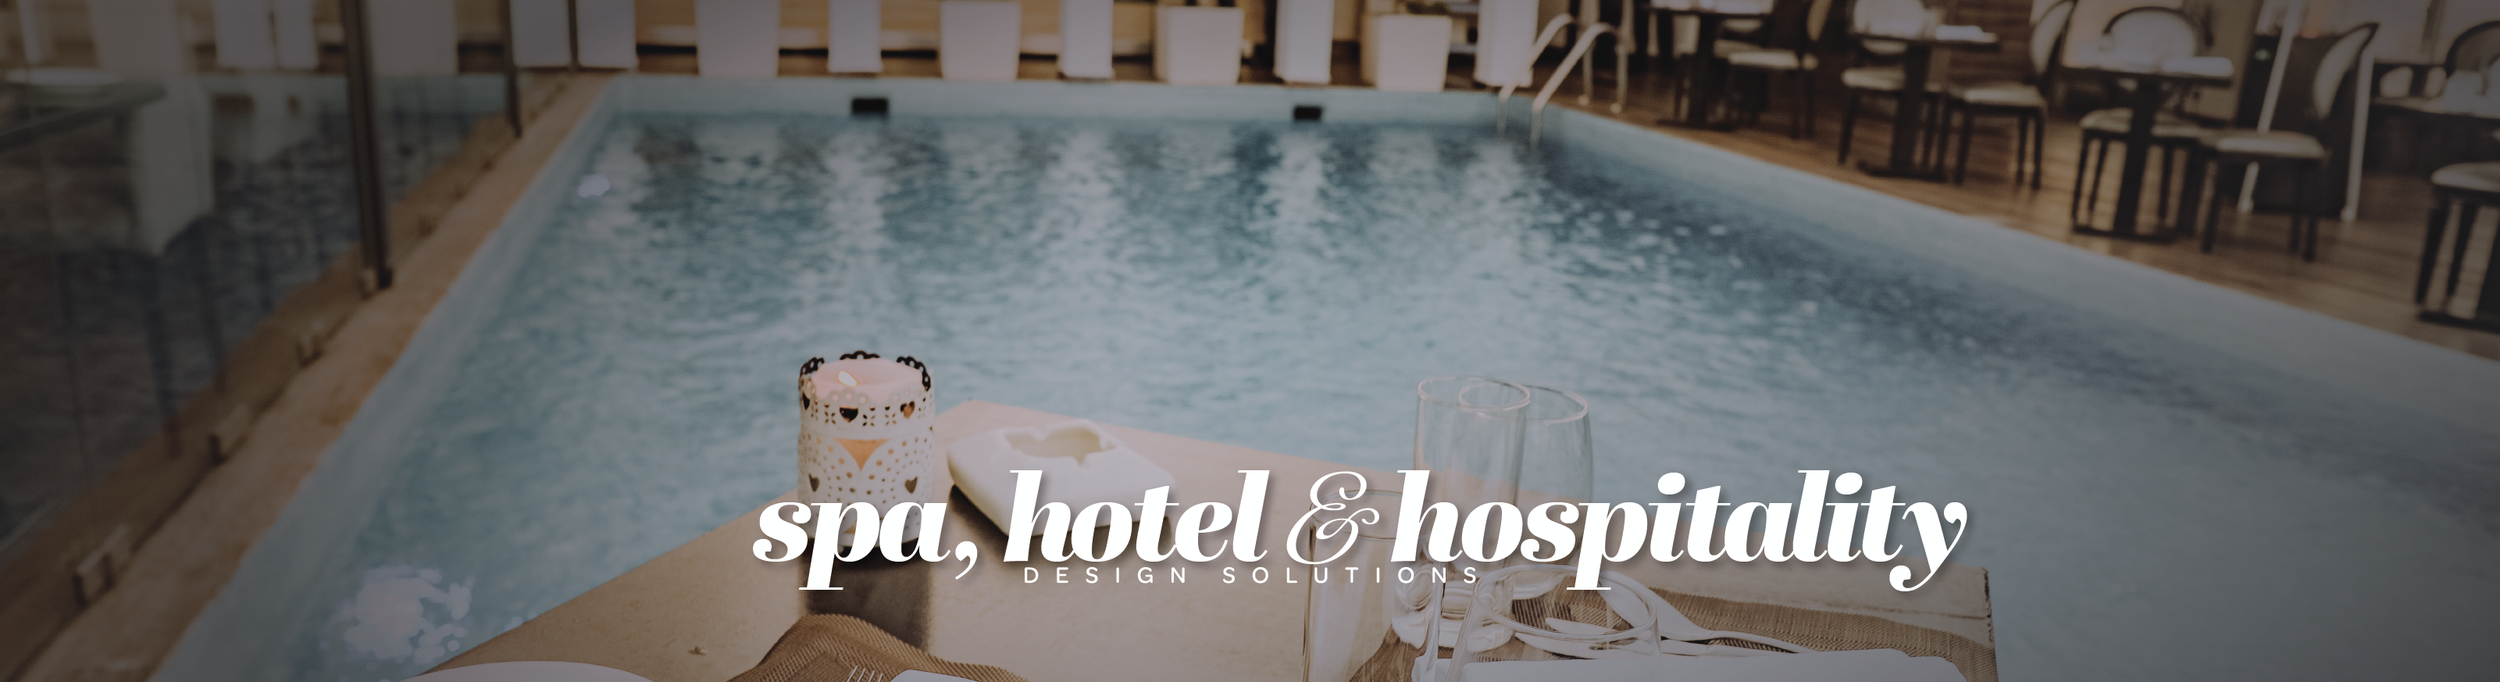 header banner - spa hotel hospitality branding.png